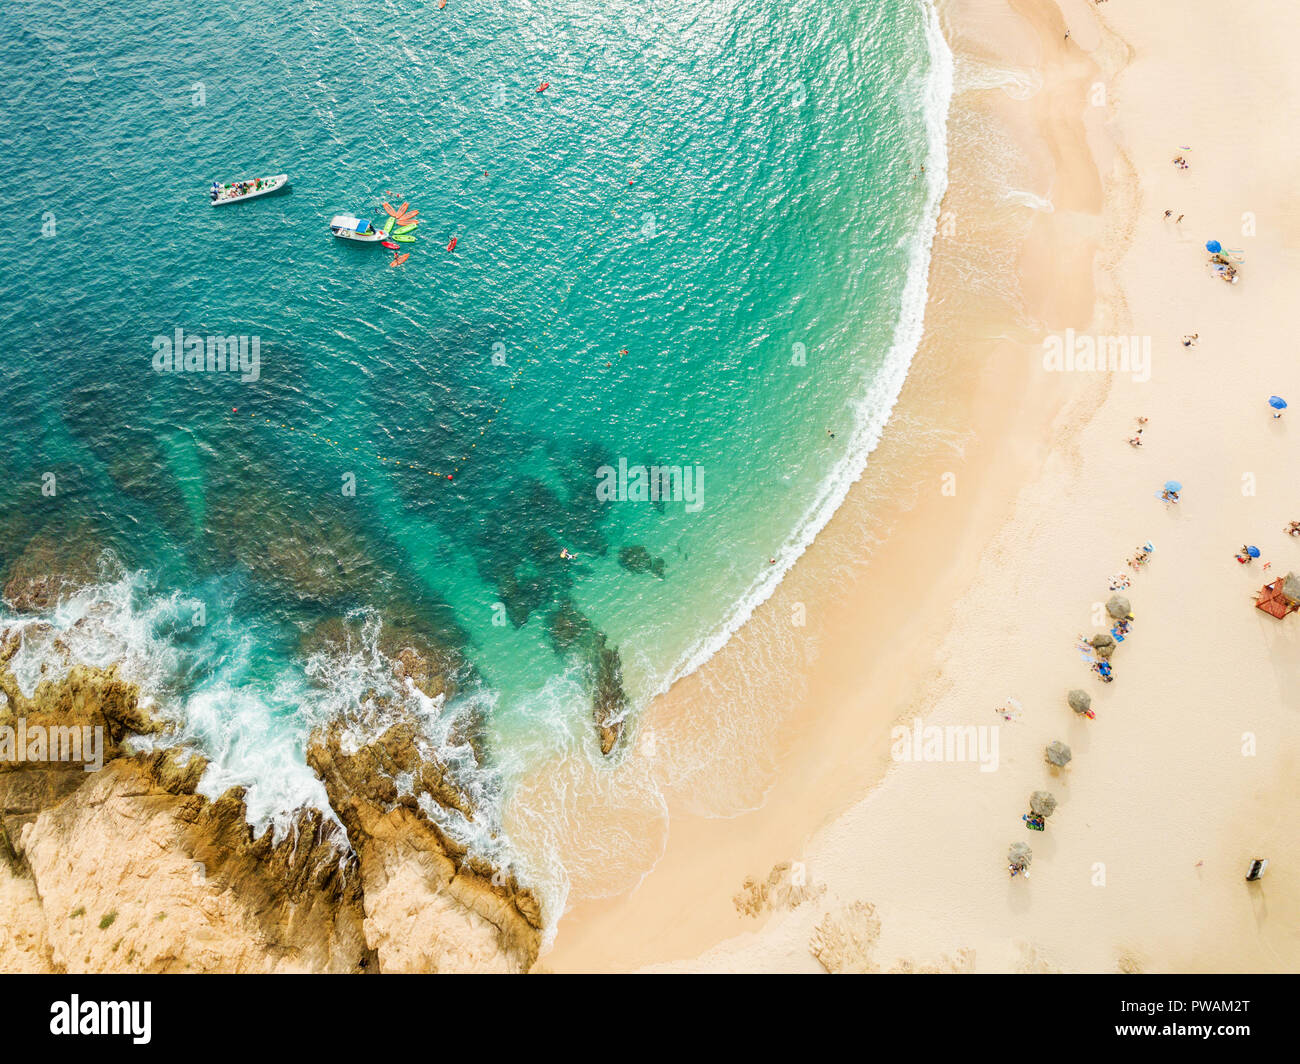 Boats and beachgoers visit Santa Maria Bay near Cabo San Lucas, Mexico. Stock Photo